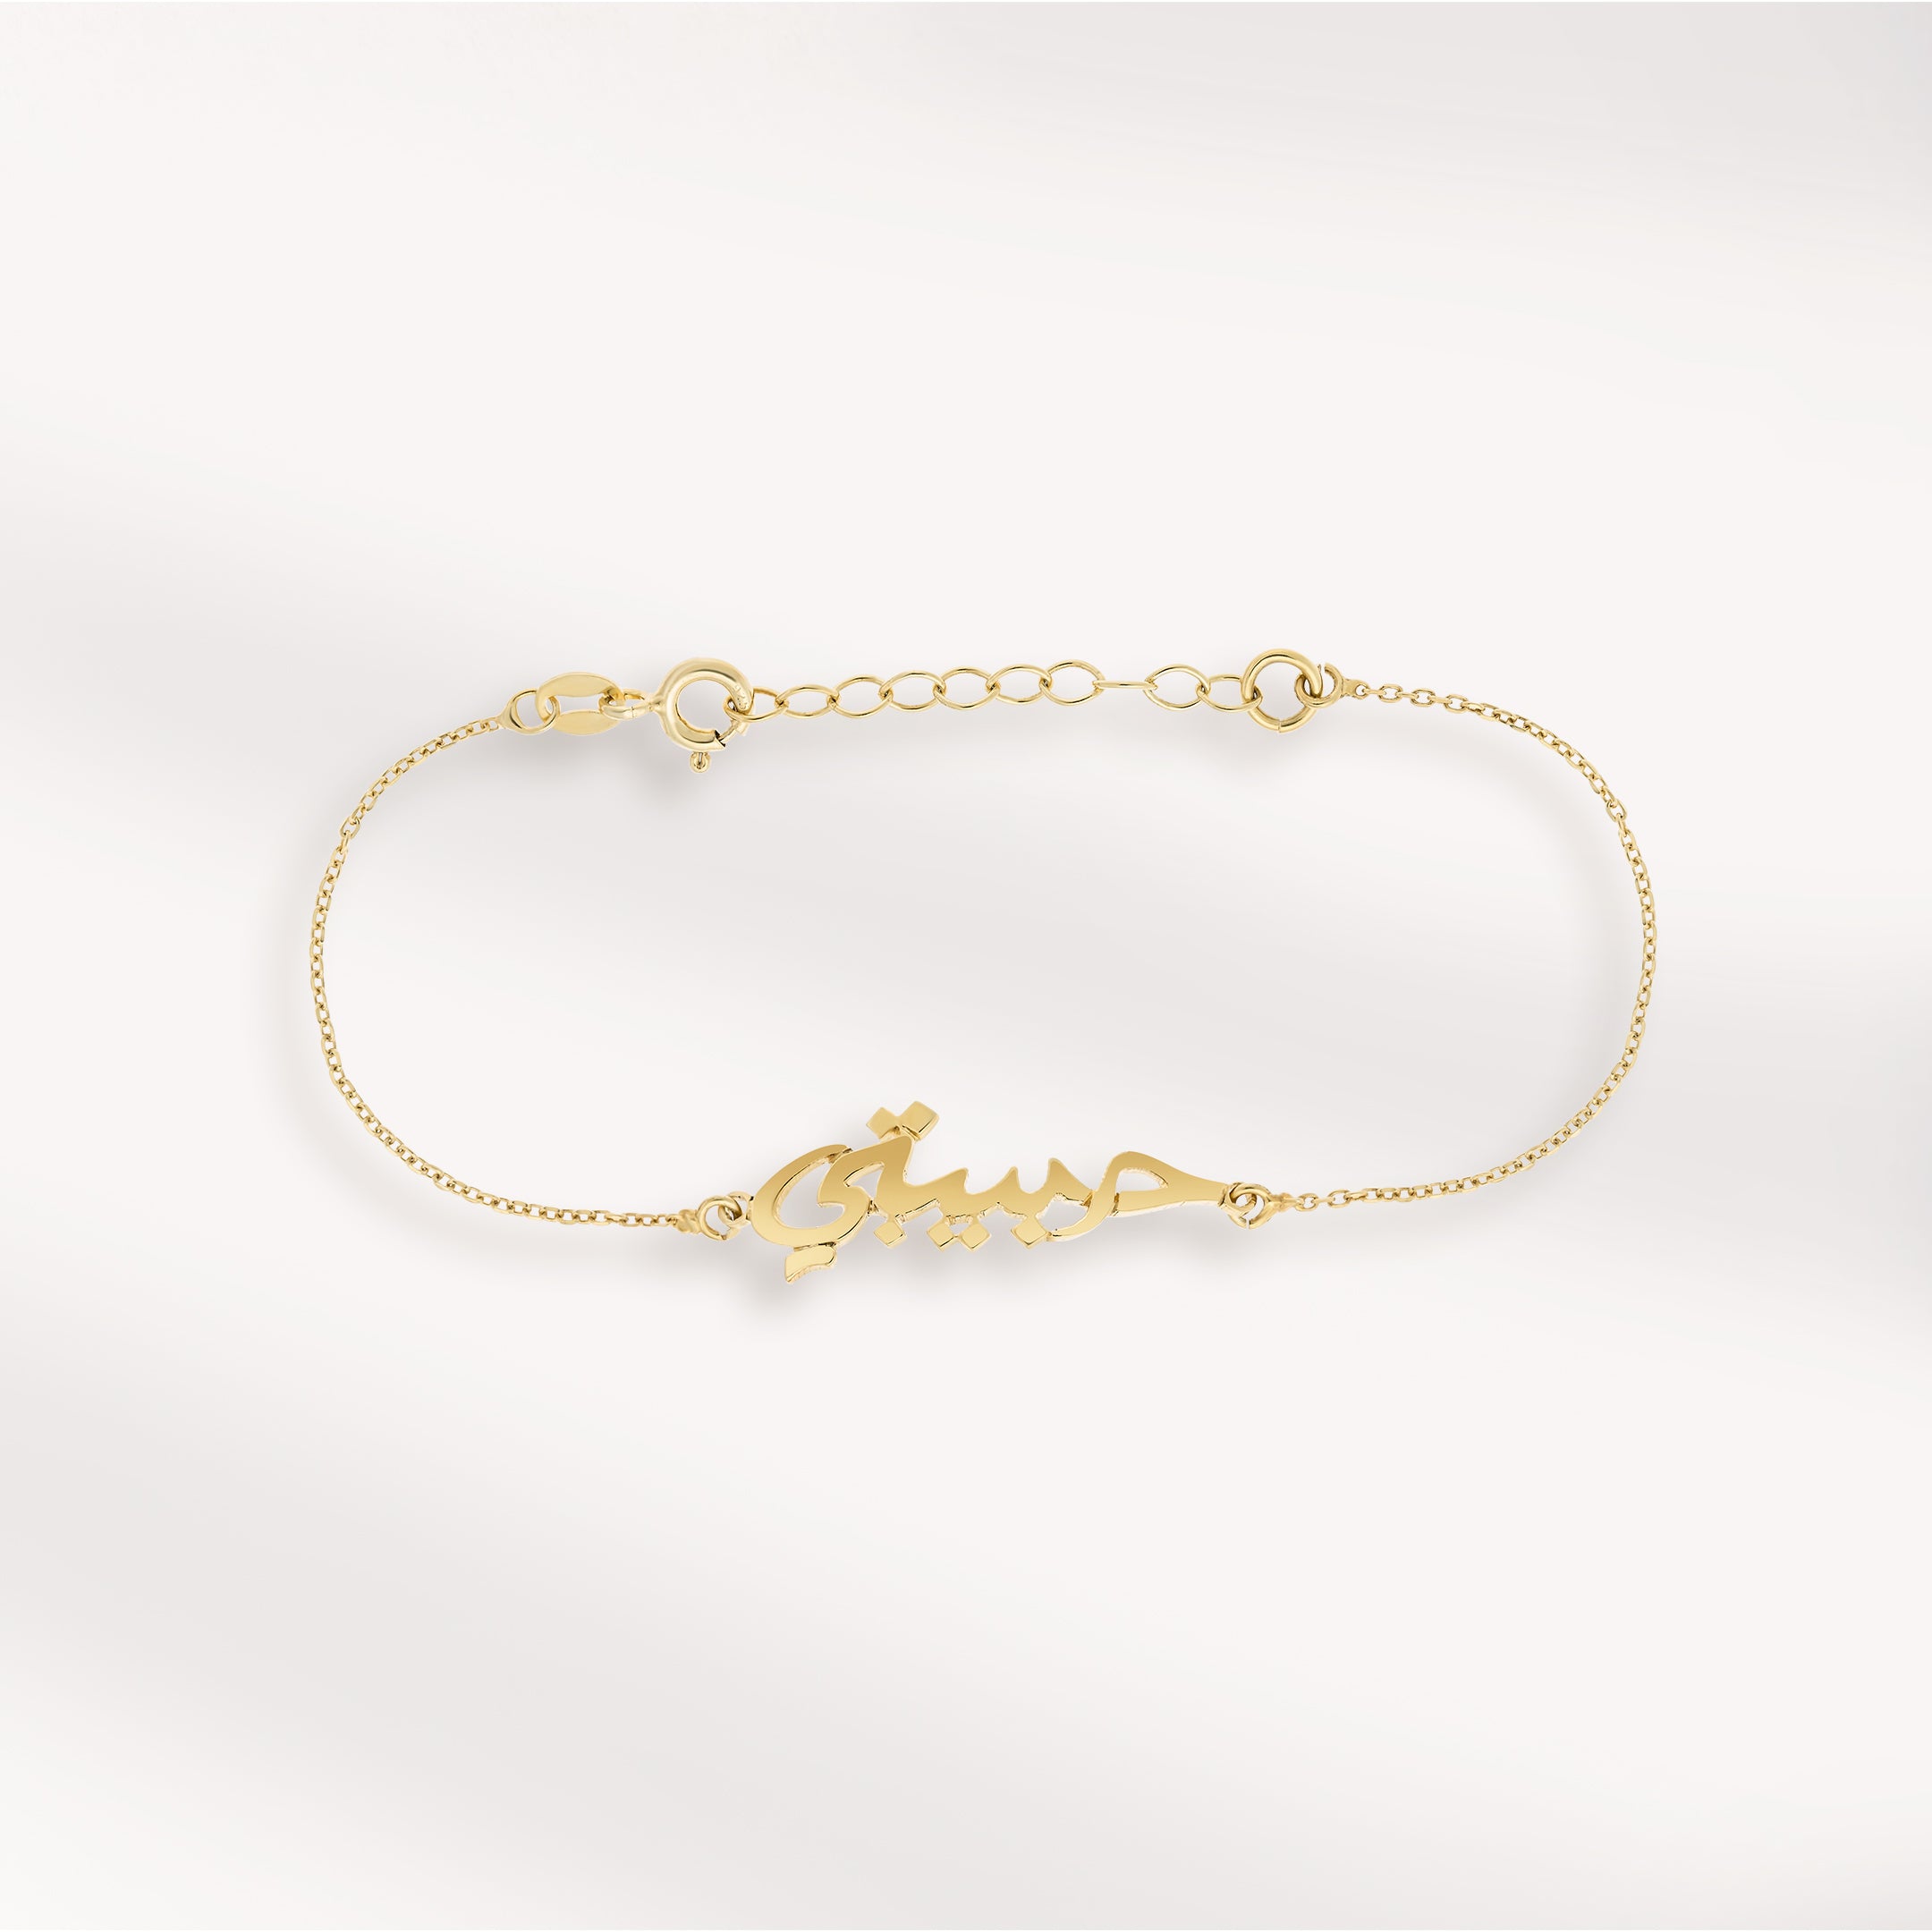 Jewellery, Chain Bracelet, 18k Gold Plated Bracelet, 18k Pure Gold, Bracelet, Silver 925 Bracelet, Custom Bracelet, Handmade, Customisable Bracelet, Name Bracelet, Arabic Alphabet Bracelet, Latin Alphabet Bracelet.